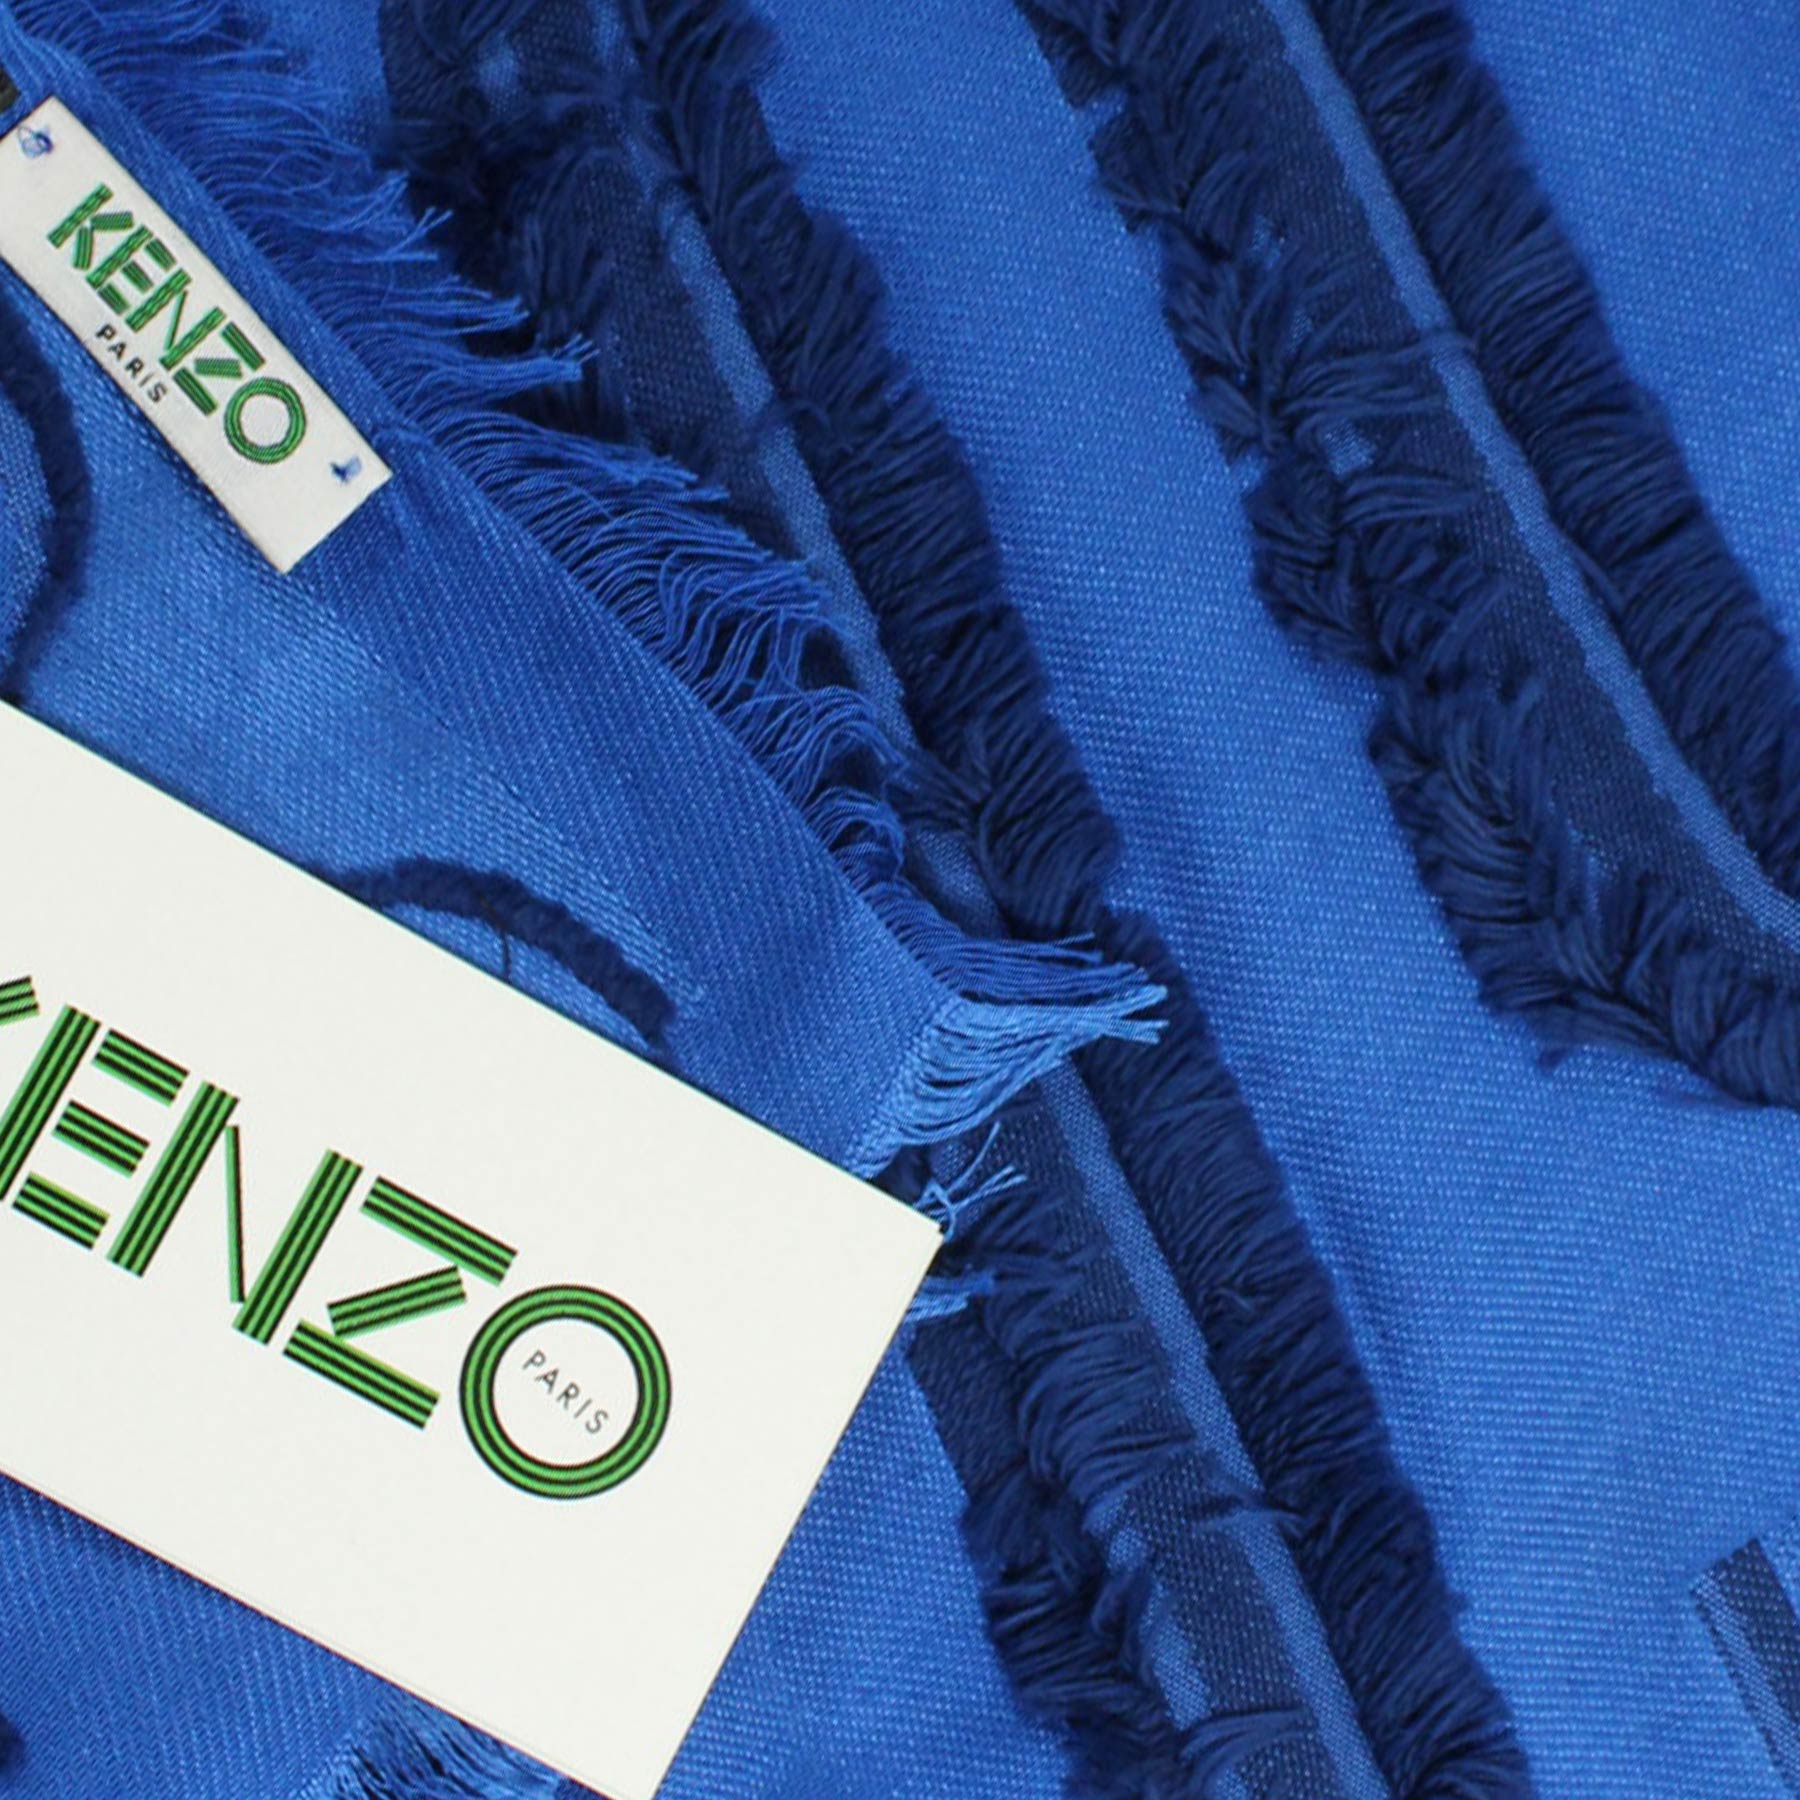 Kenzo Scarf Royal Blue Design - Large Cotton Silk Shawl FINAL SALE